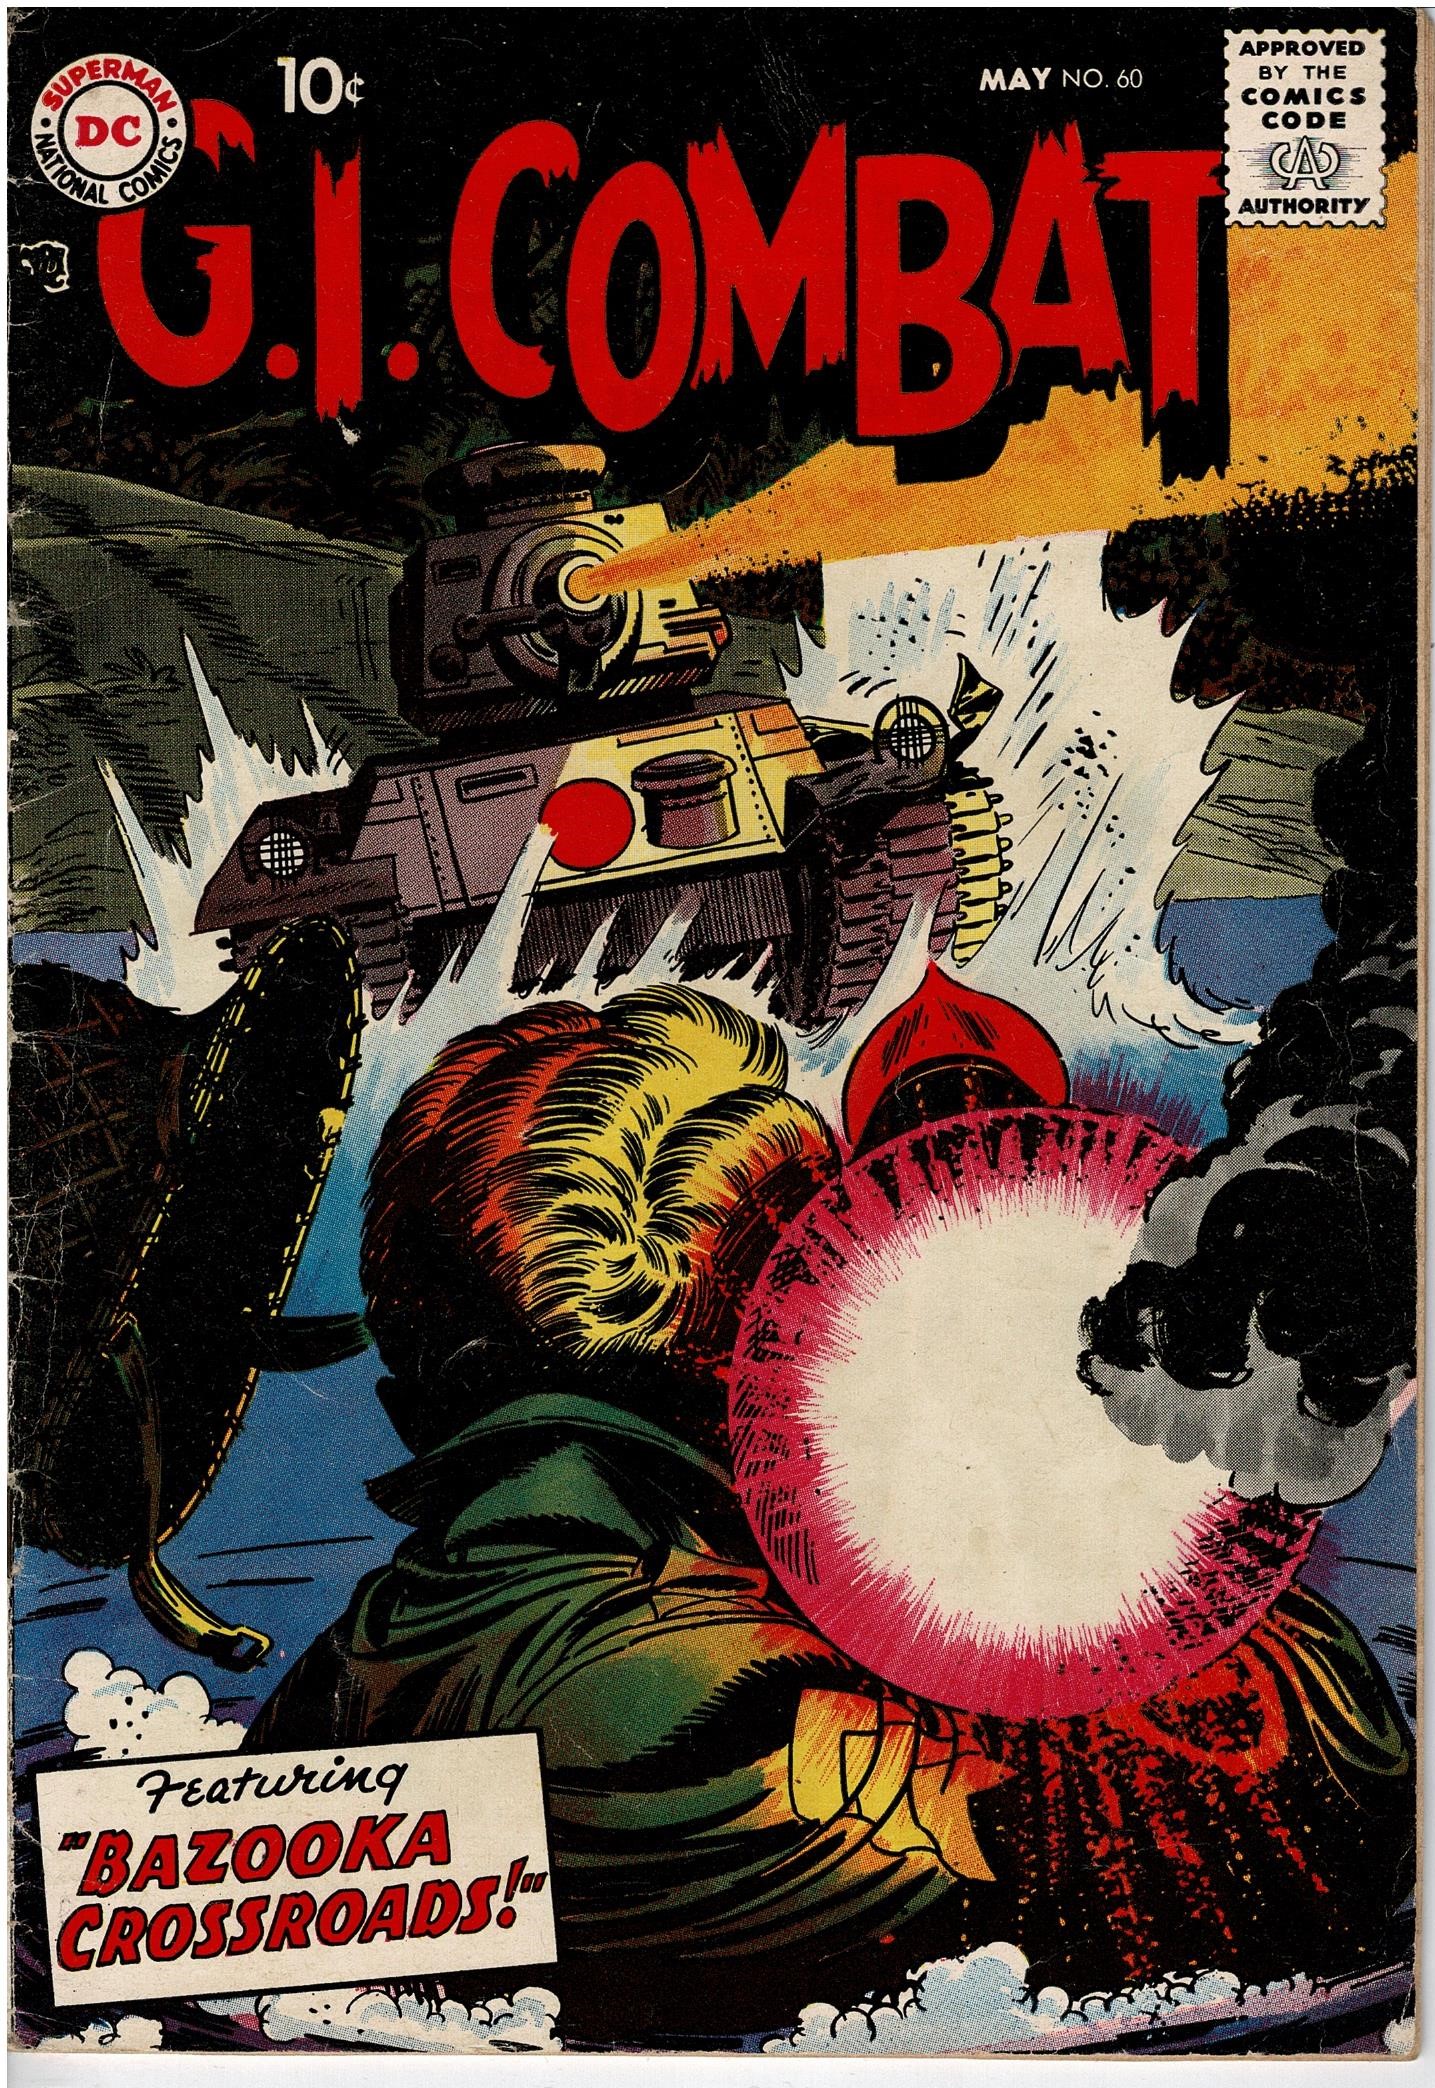 G.I. Combat #60 - Vg-